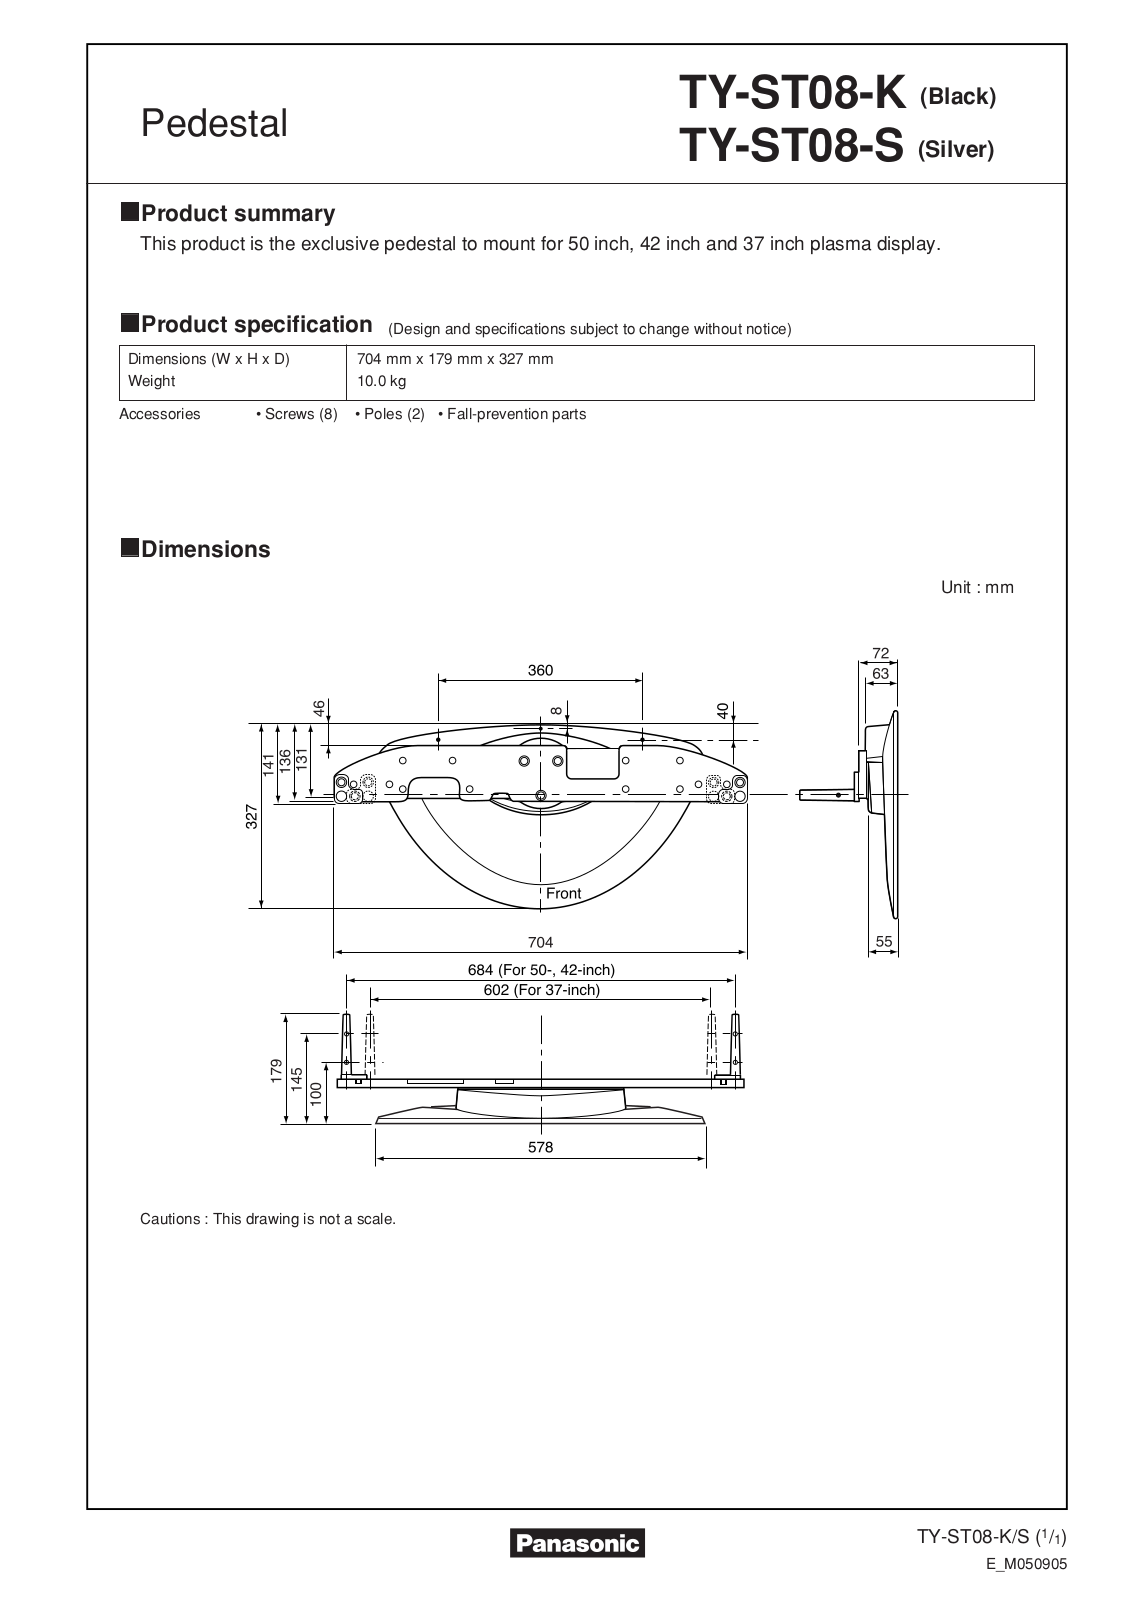 Panasonic TYST08 User Manual